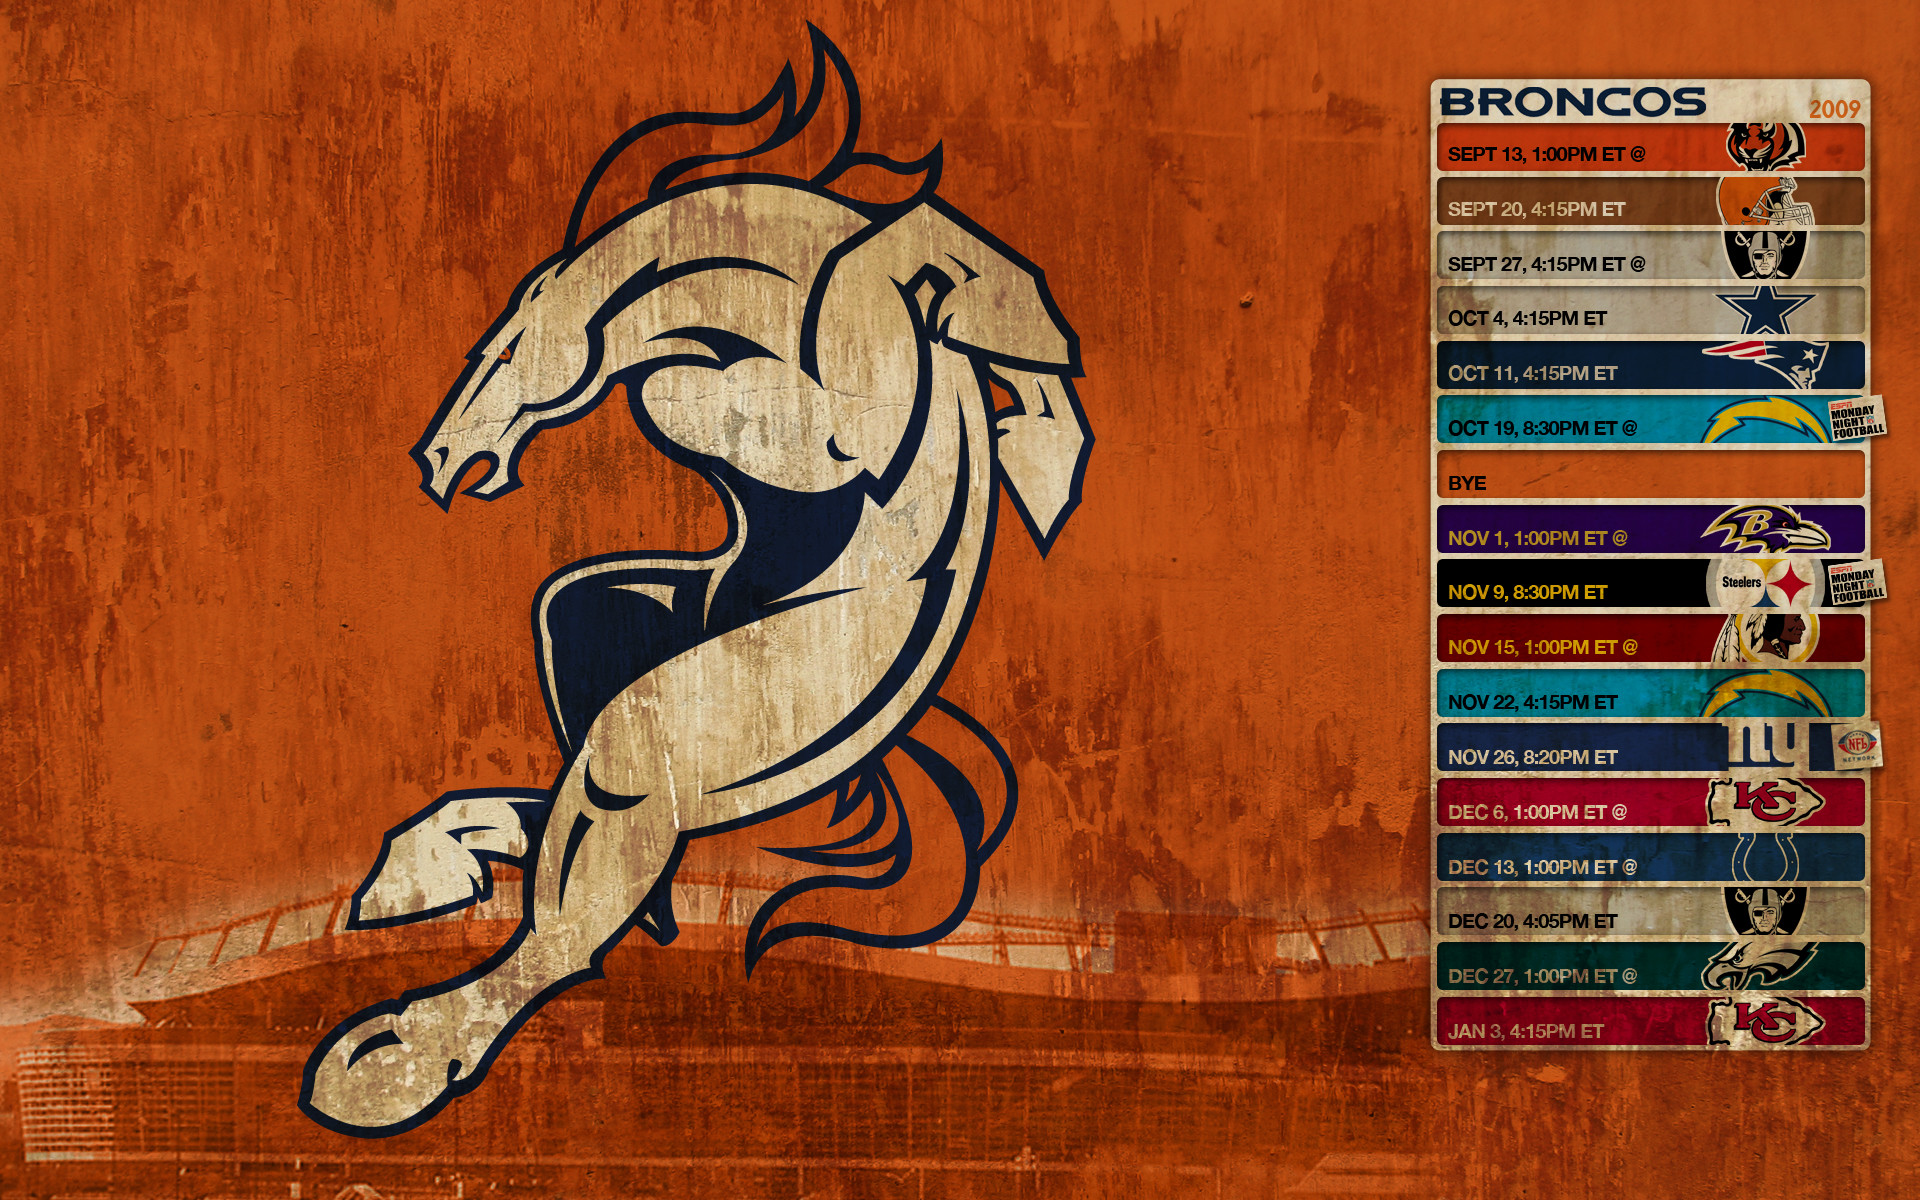 2009-Broncos-Alternate-Schedule-Wallpaper-by-Hawk-Eyes-